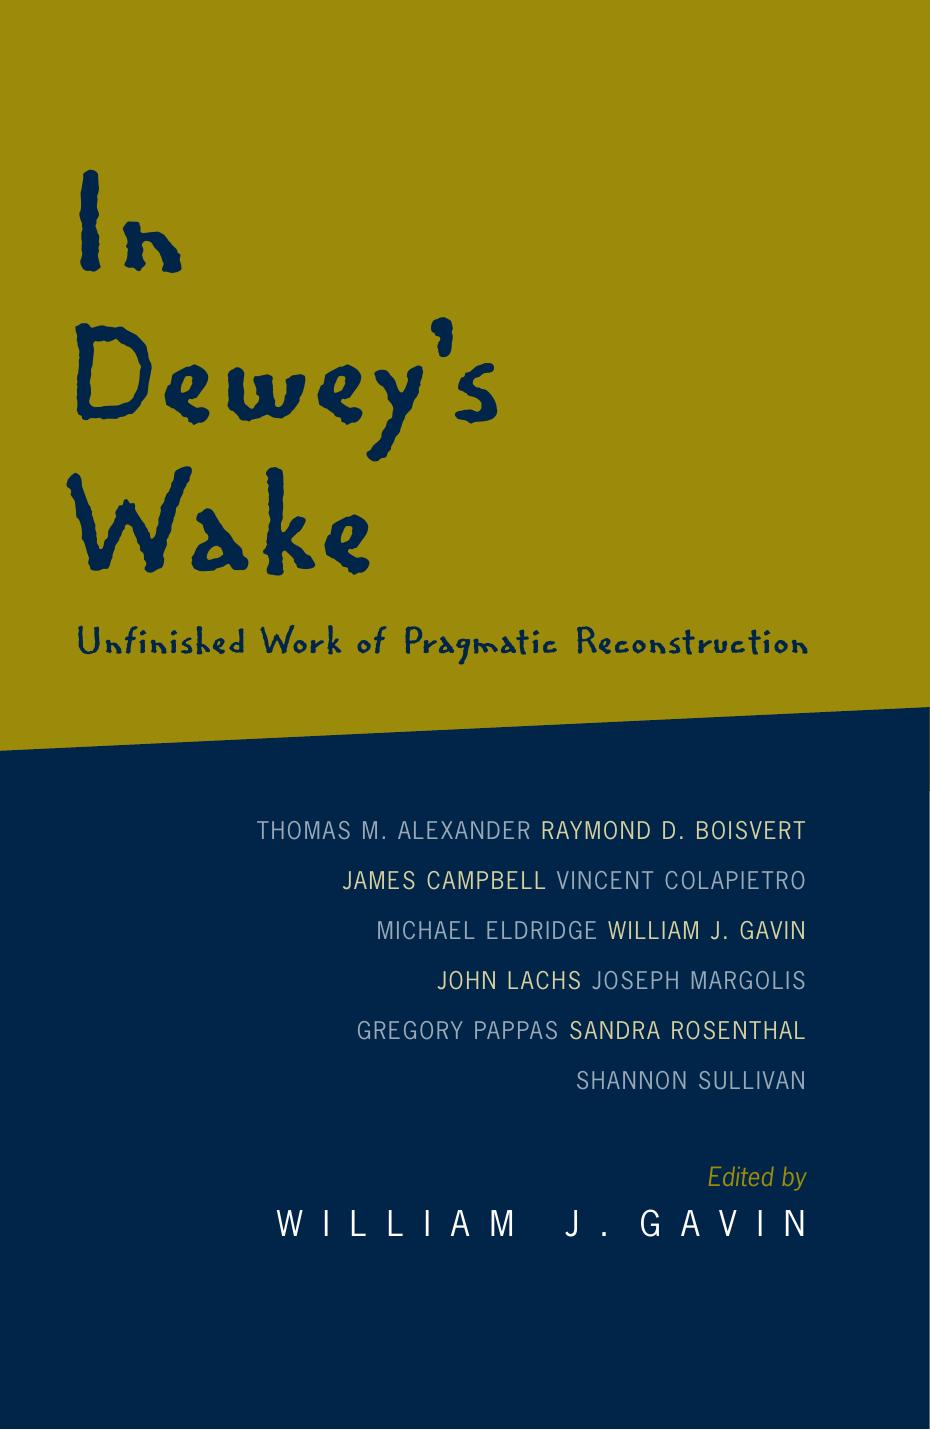 In Dewey's Wake : Unfinished Work of Pragmatic Reconstruction by William J. Gavin; William J. Gavin